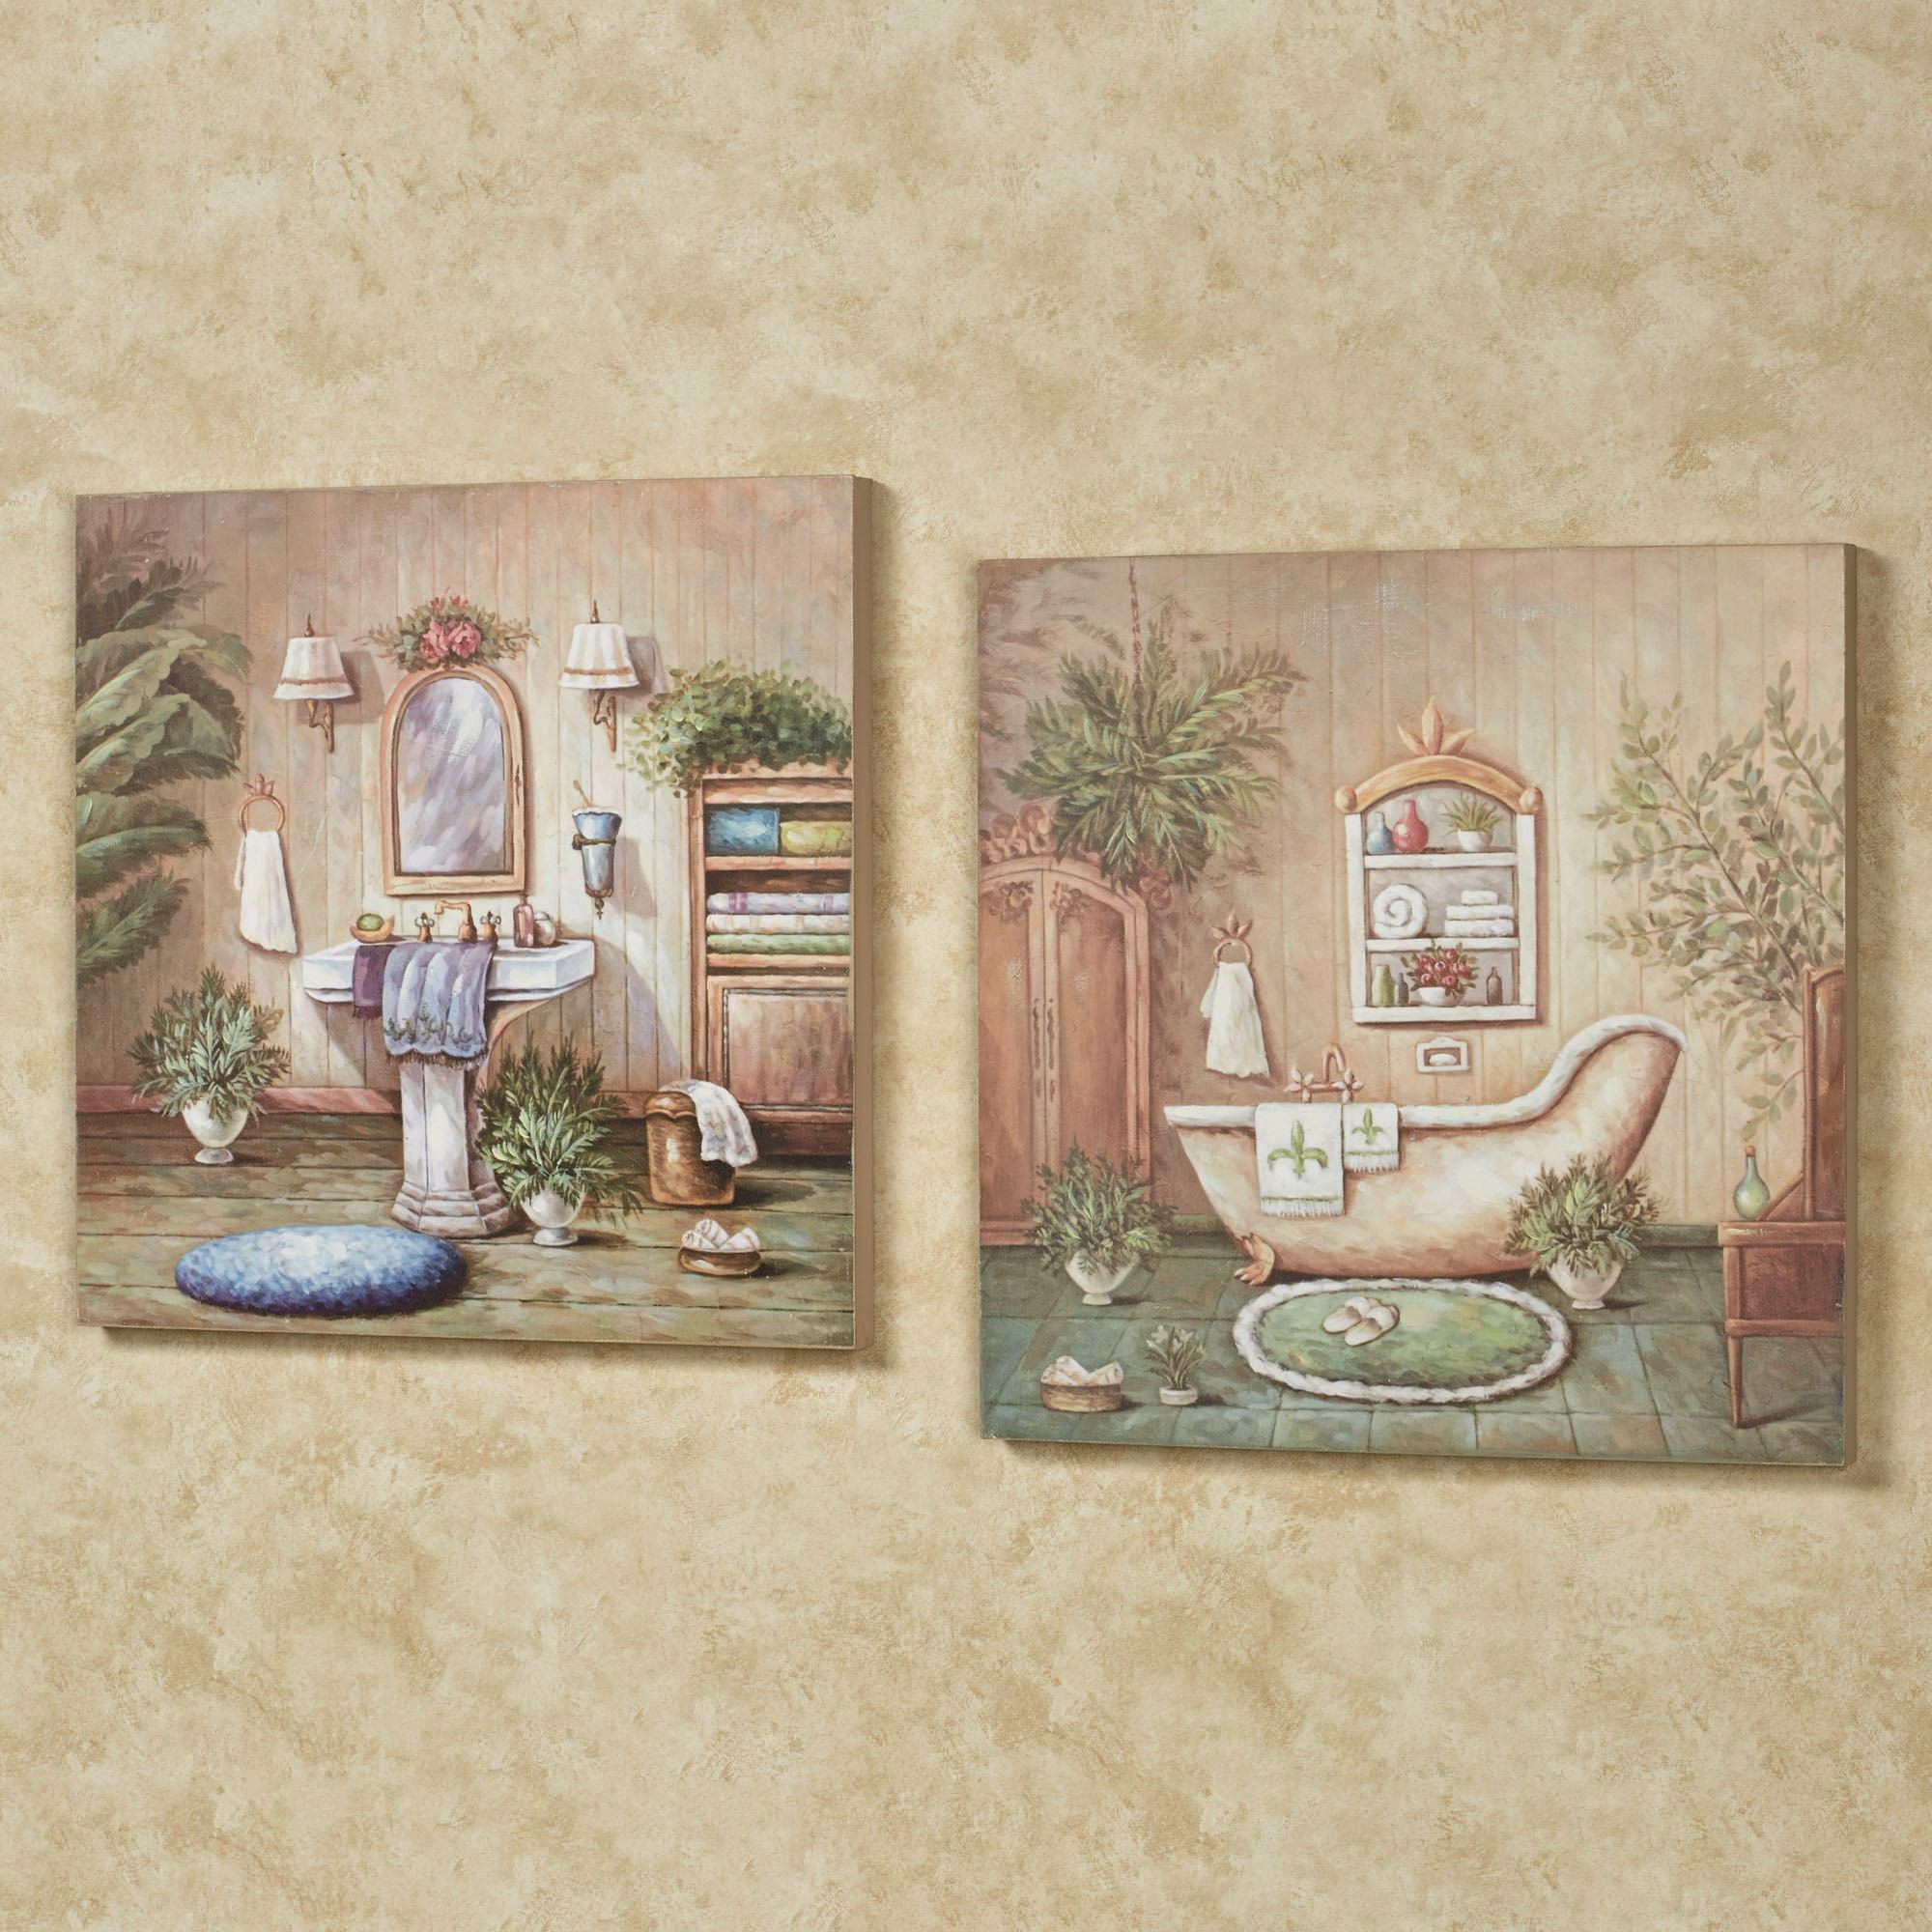 Artwork For Bathroom Walls
 Blissful Bath Wooden Wall Art Plaque Set